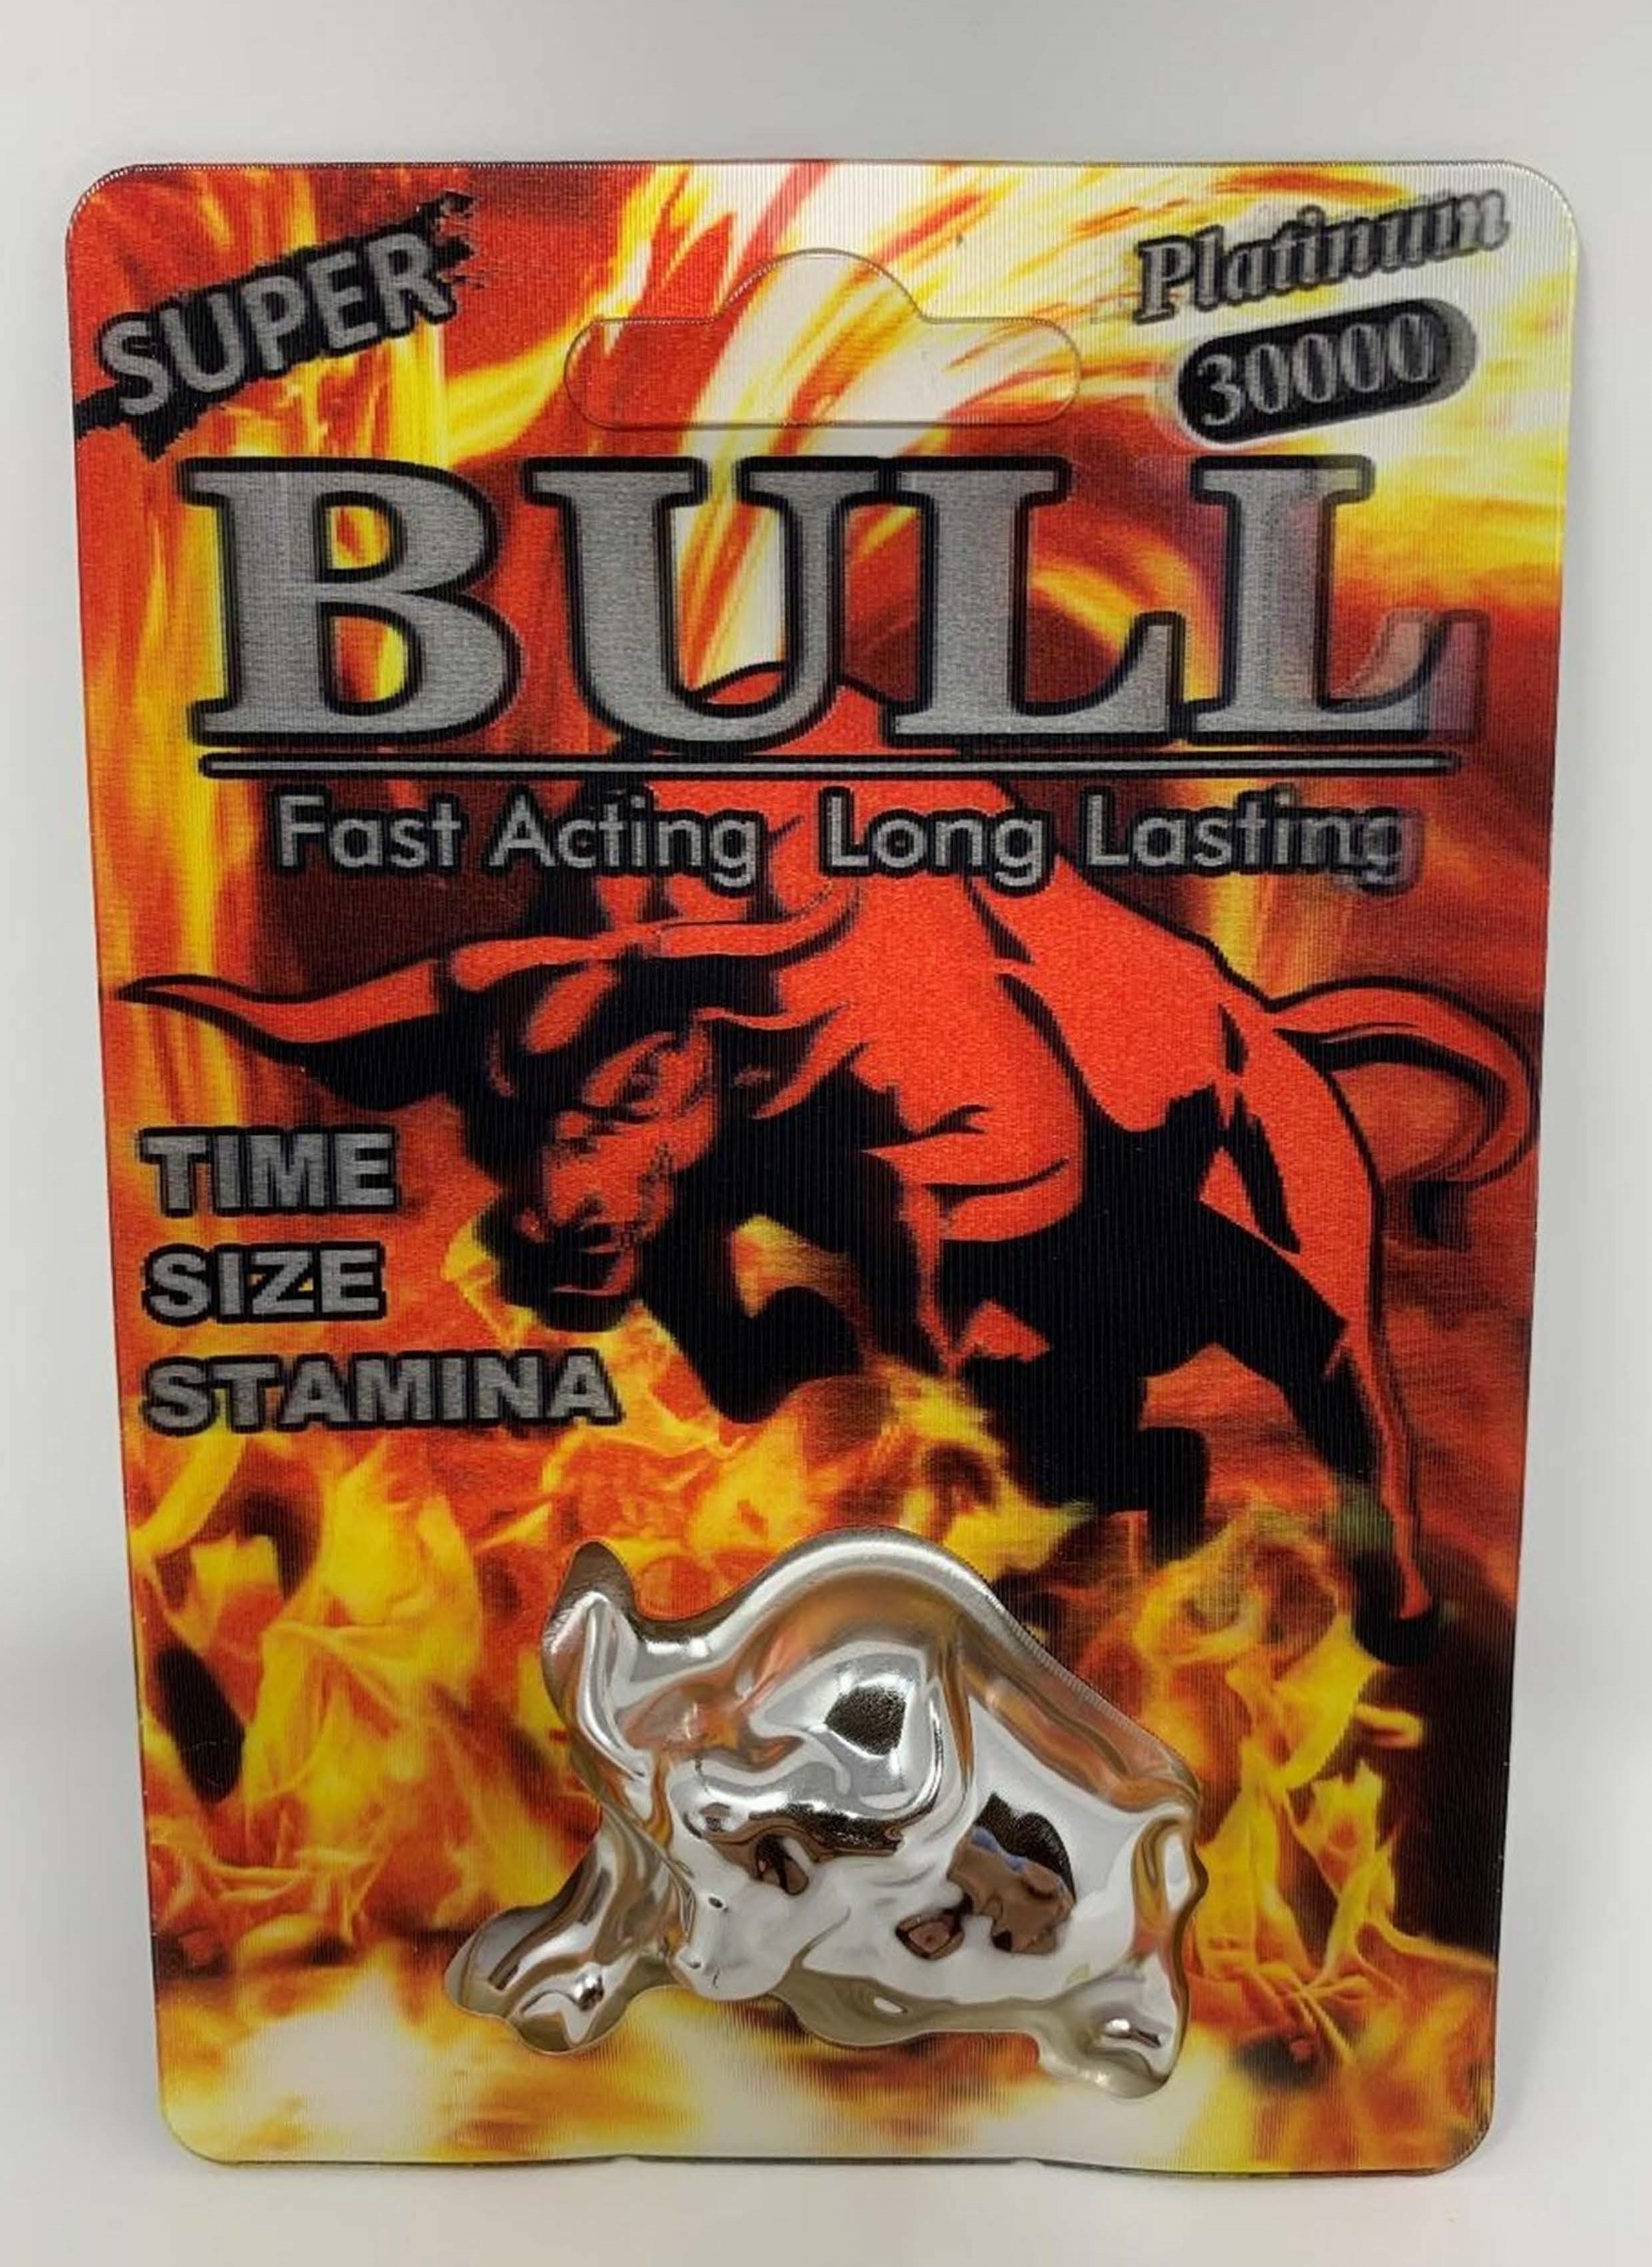 Image of the illigal product: Bull Platinum 30000